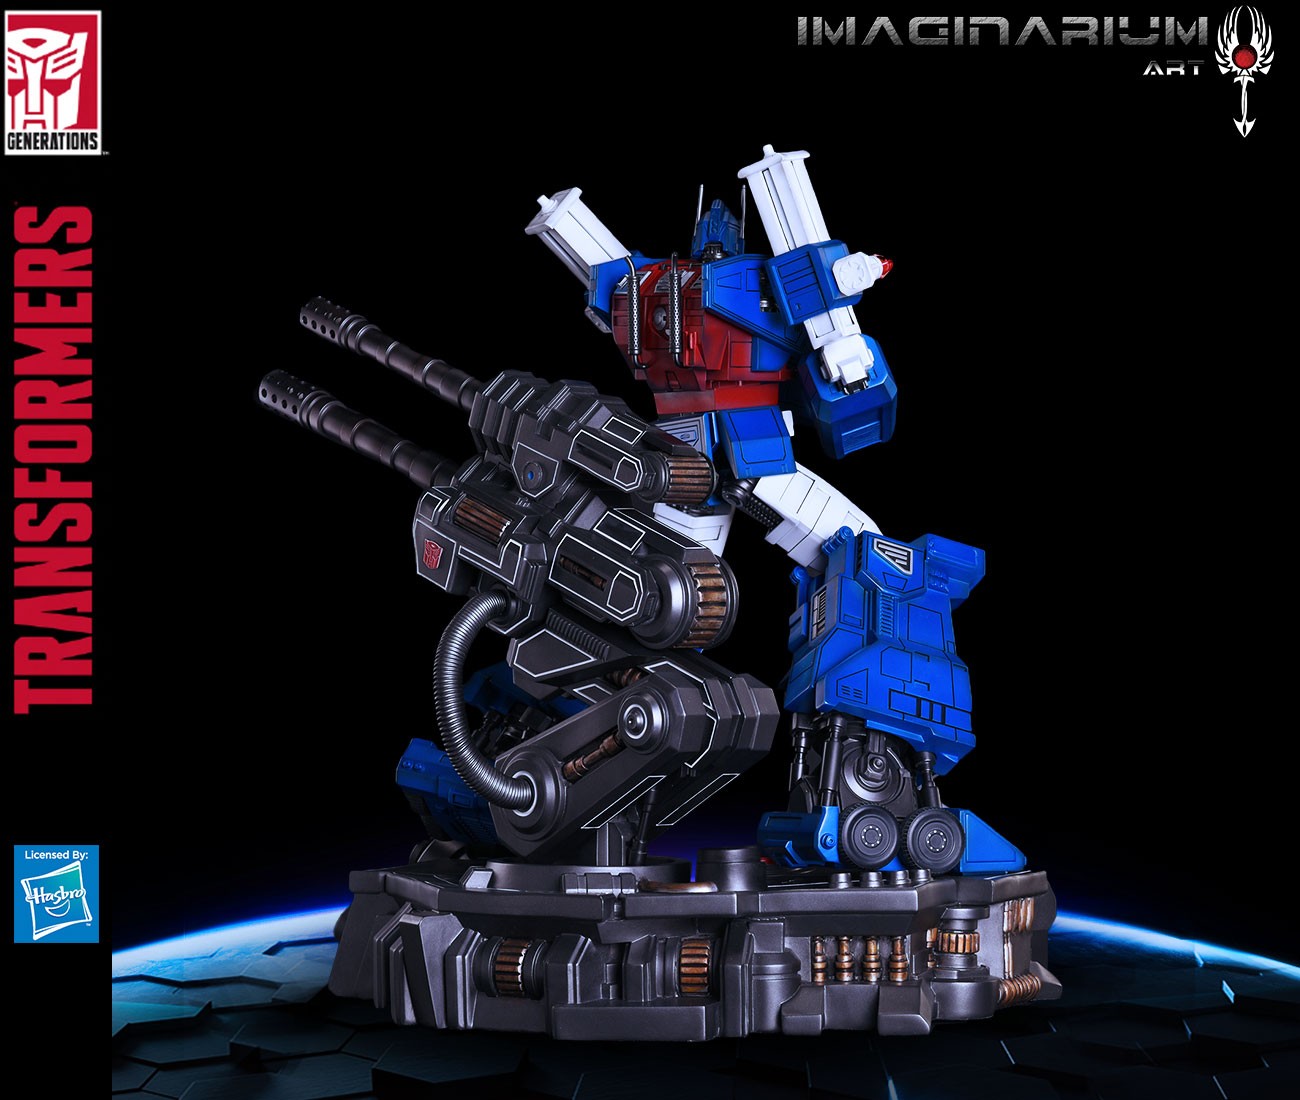 Transformers News: New Images of Imaginarium Art Transformers Ultra Magnus Statue